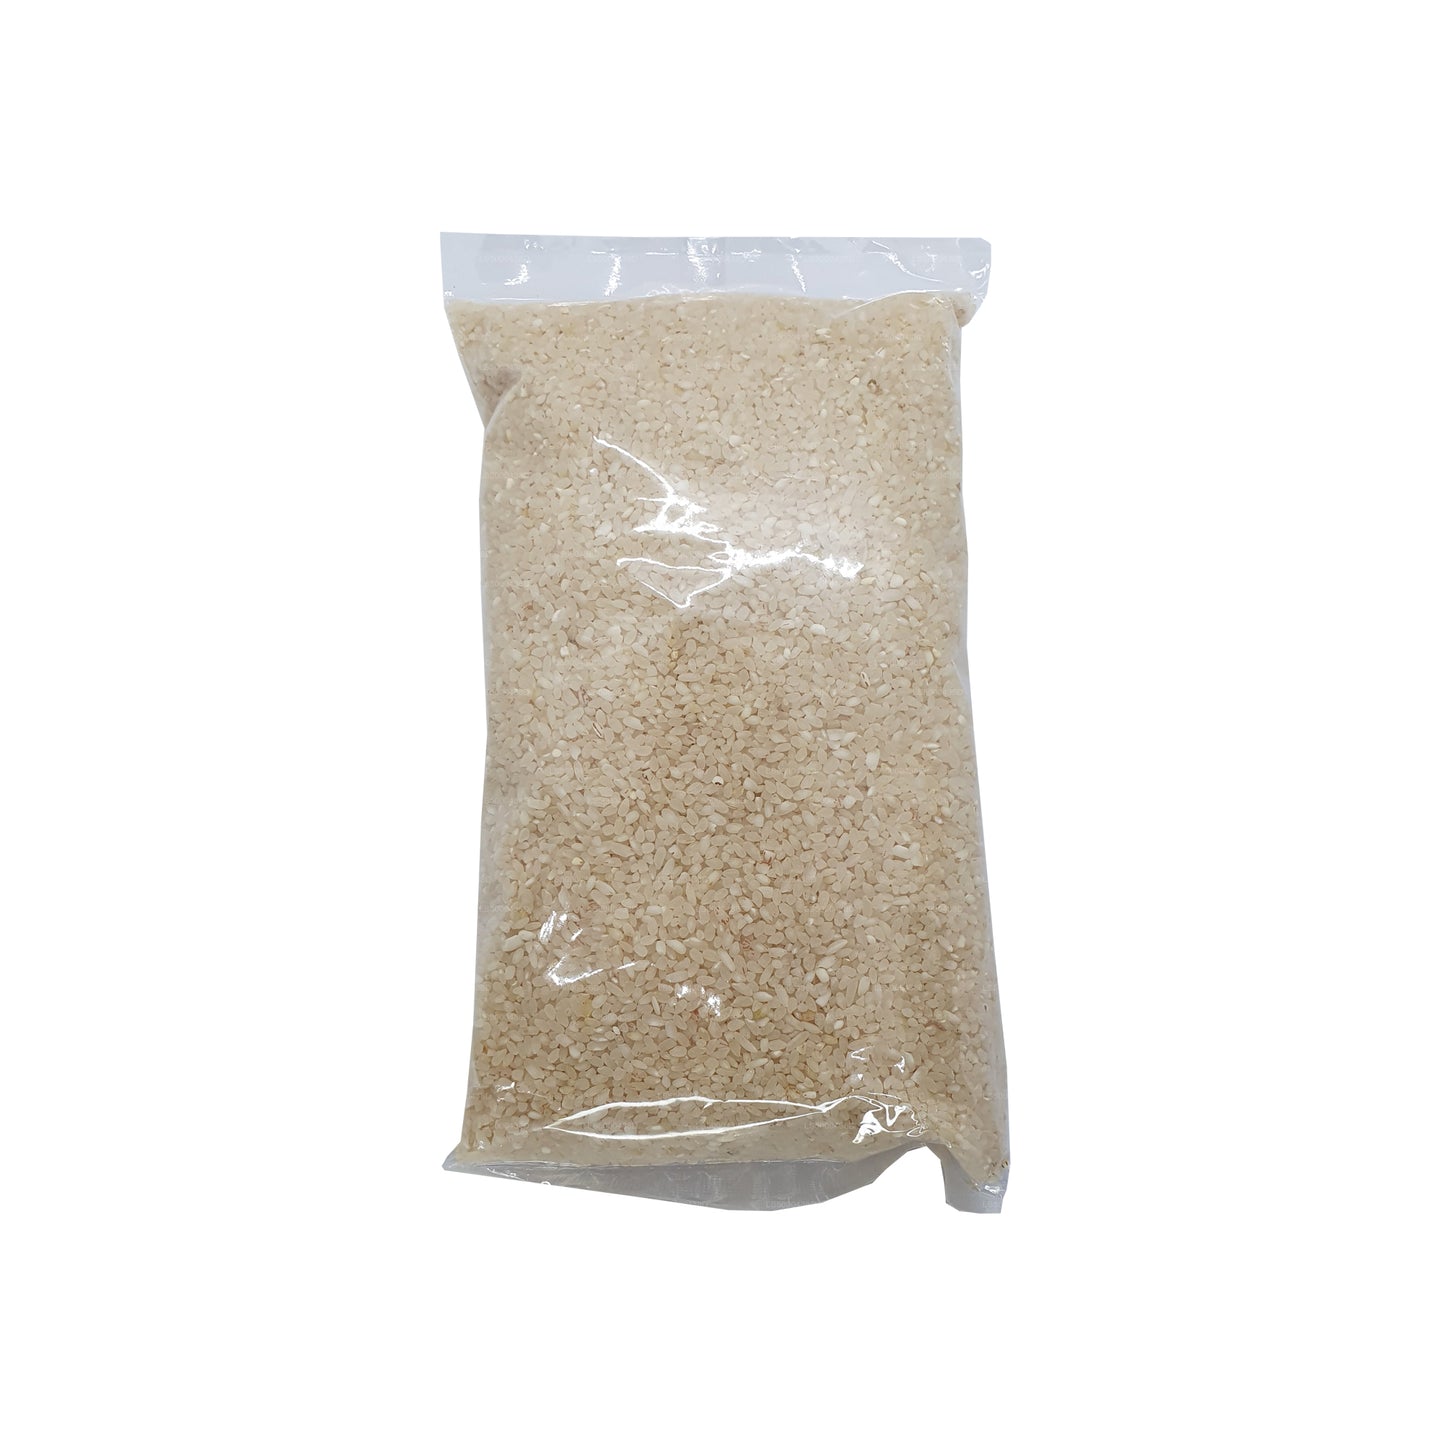 vCeylon Suwandel Rice (3kg)